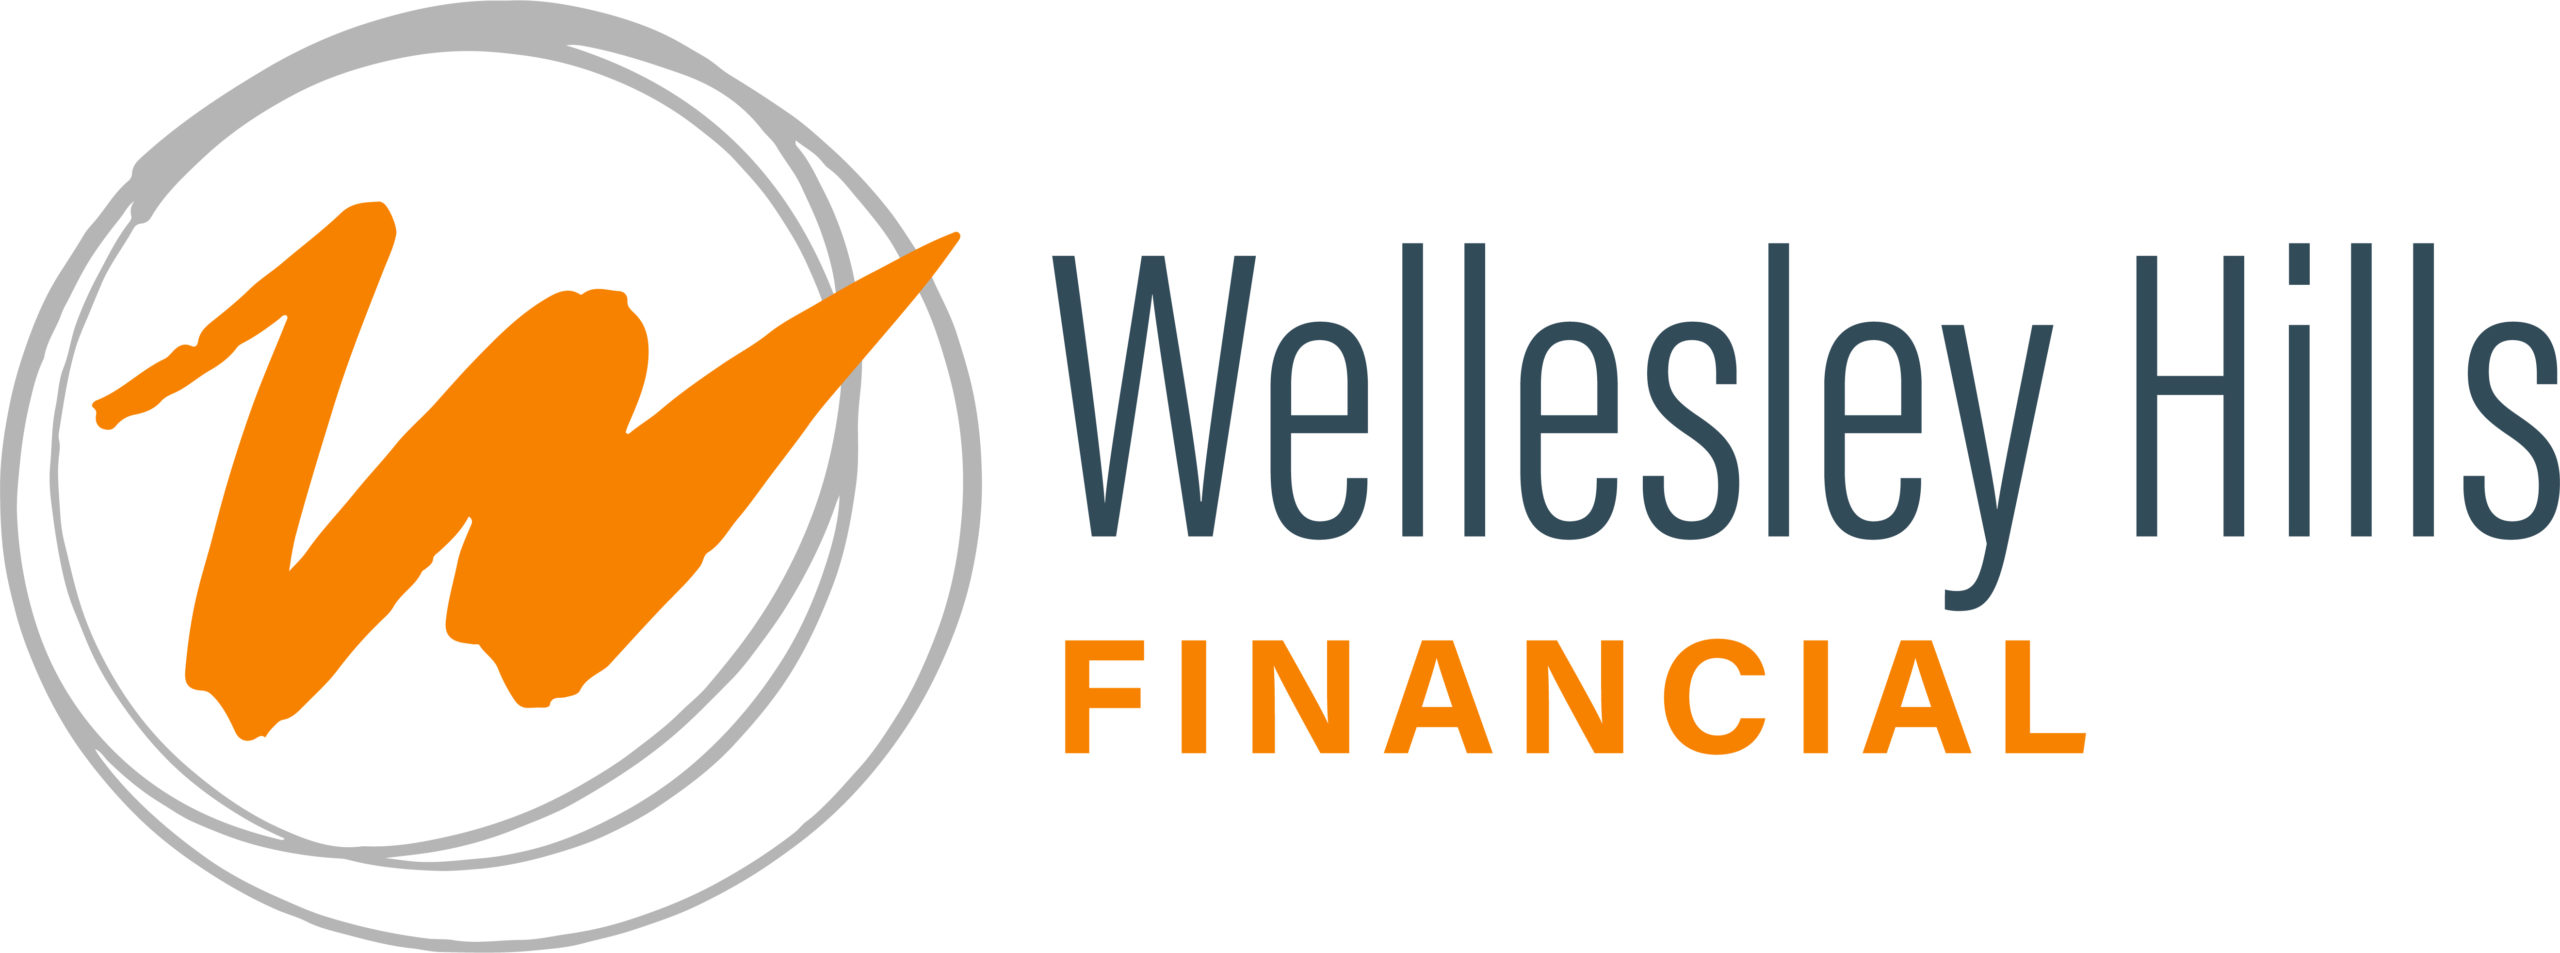 Wellesley Hills Financial Logo